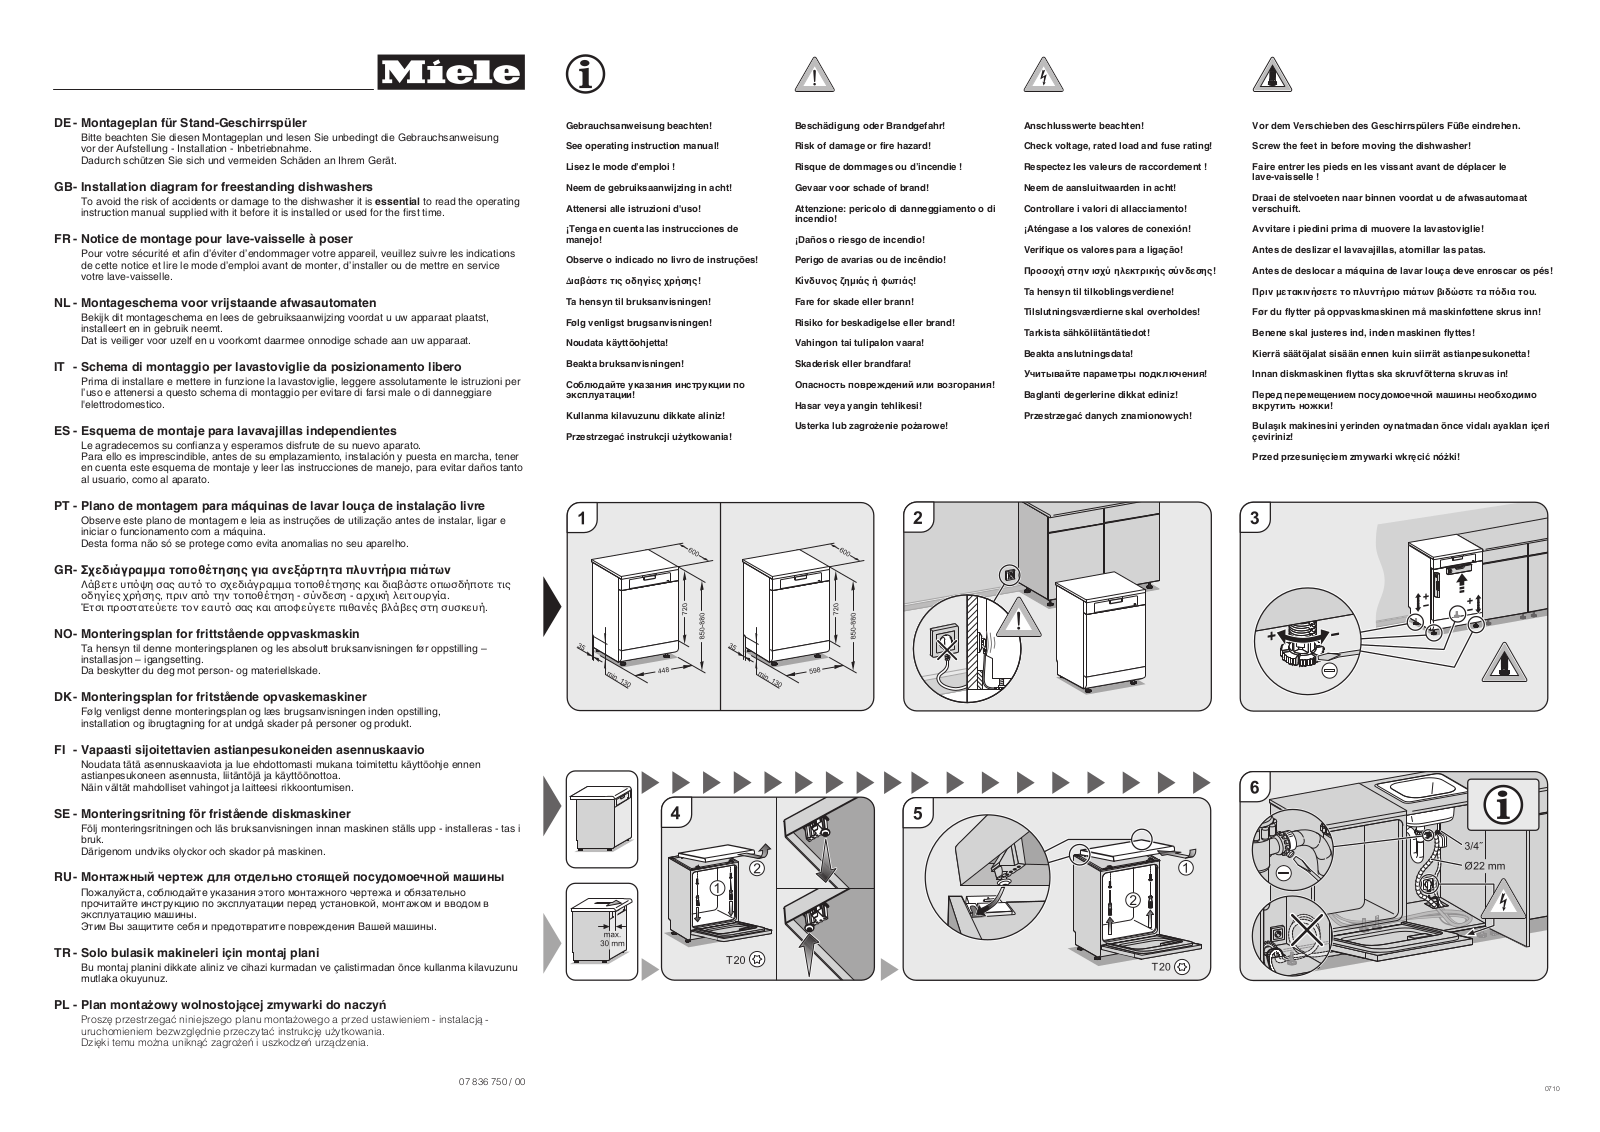 Miele G 1730 SC, G 1041, G 4302 SC, G 4101, G 1022 Installation diagram for freestanding dishwashers